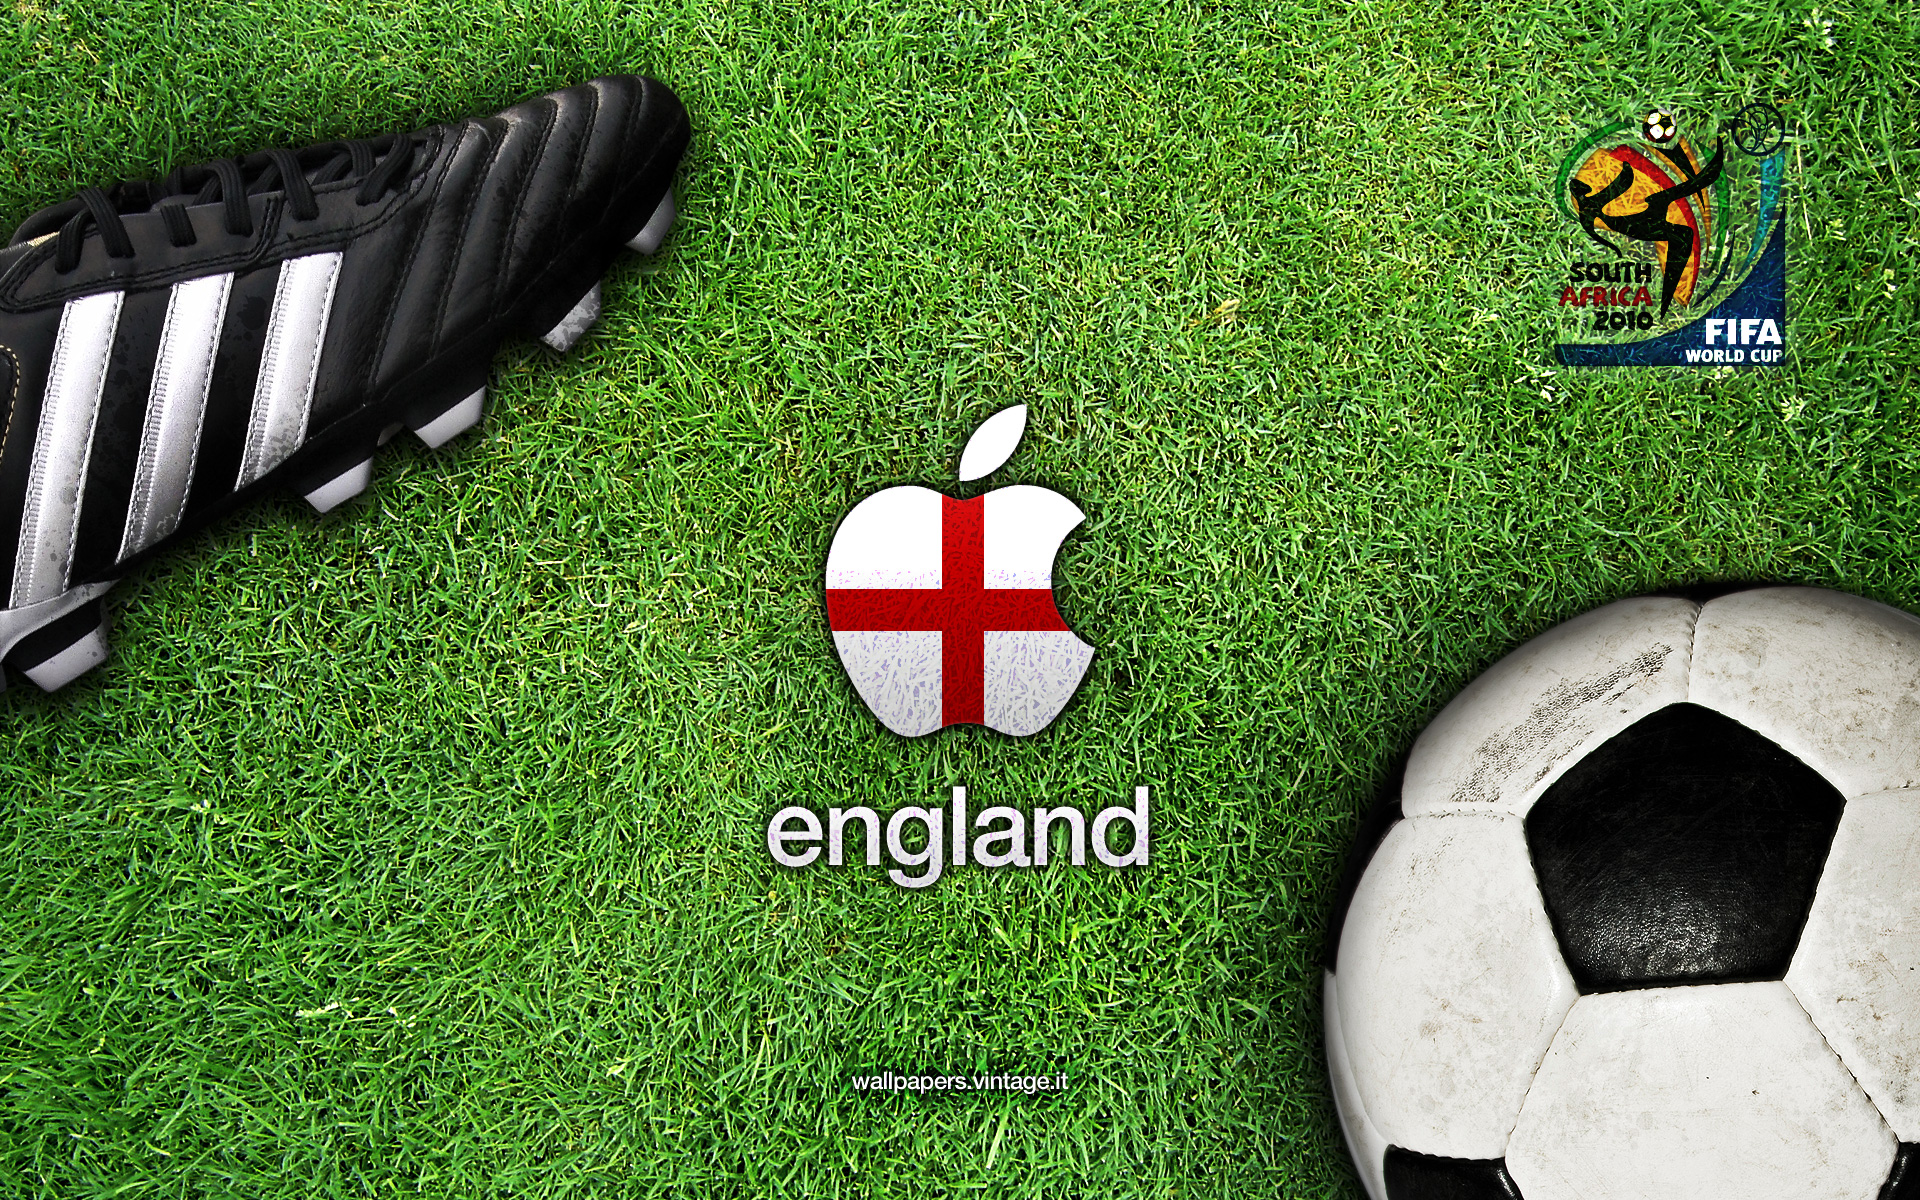 England Fifa World Cup wallpaper Desktop HD iPad iPhone